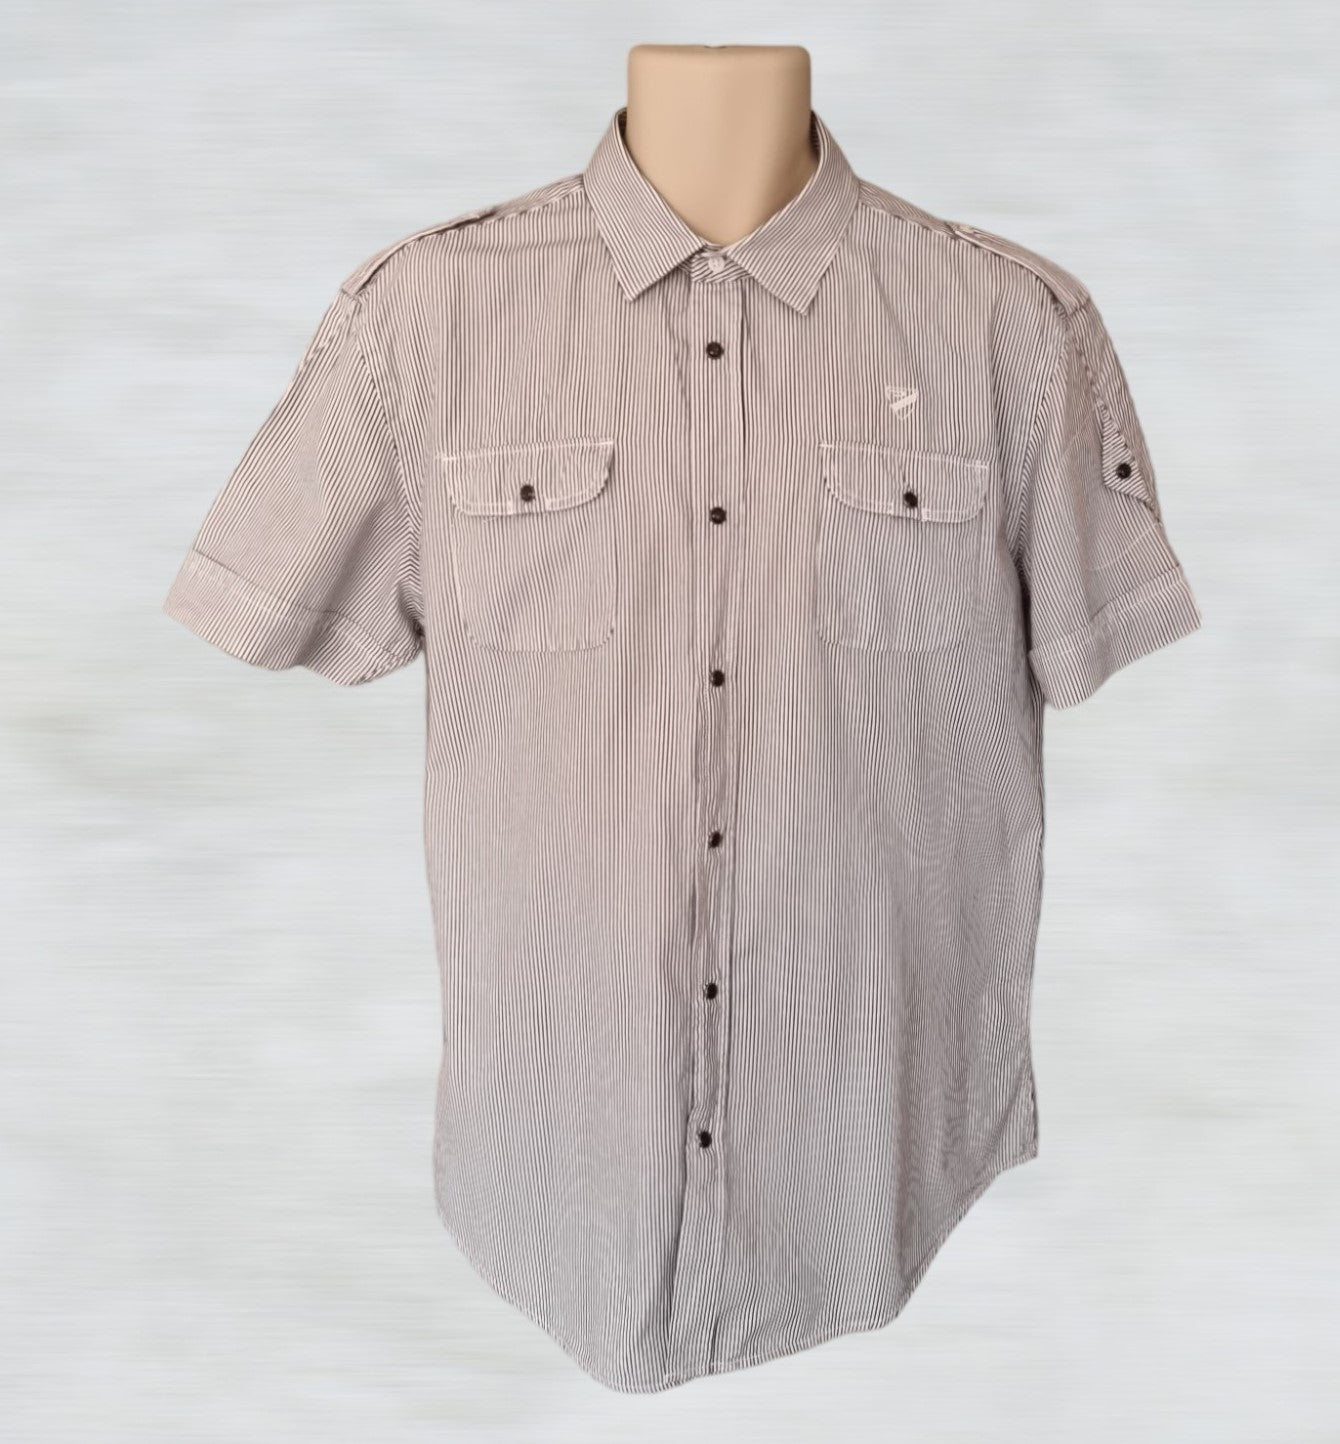 Diesel Men’s Black & White Striped Short Sleeve Cotton Shirt UK XXL Timeless Fashions